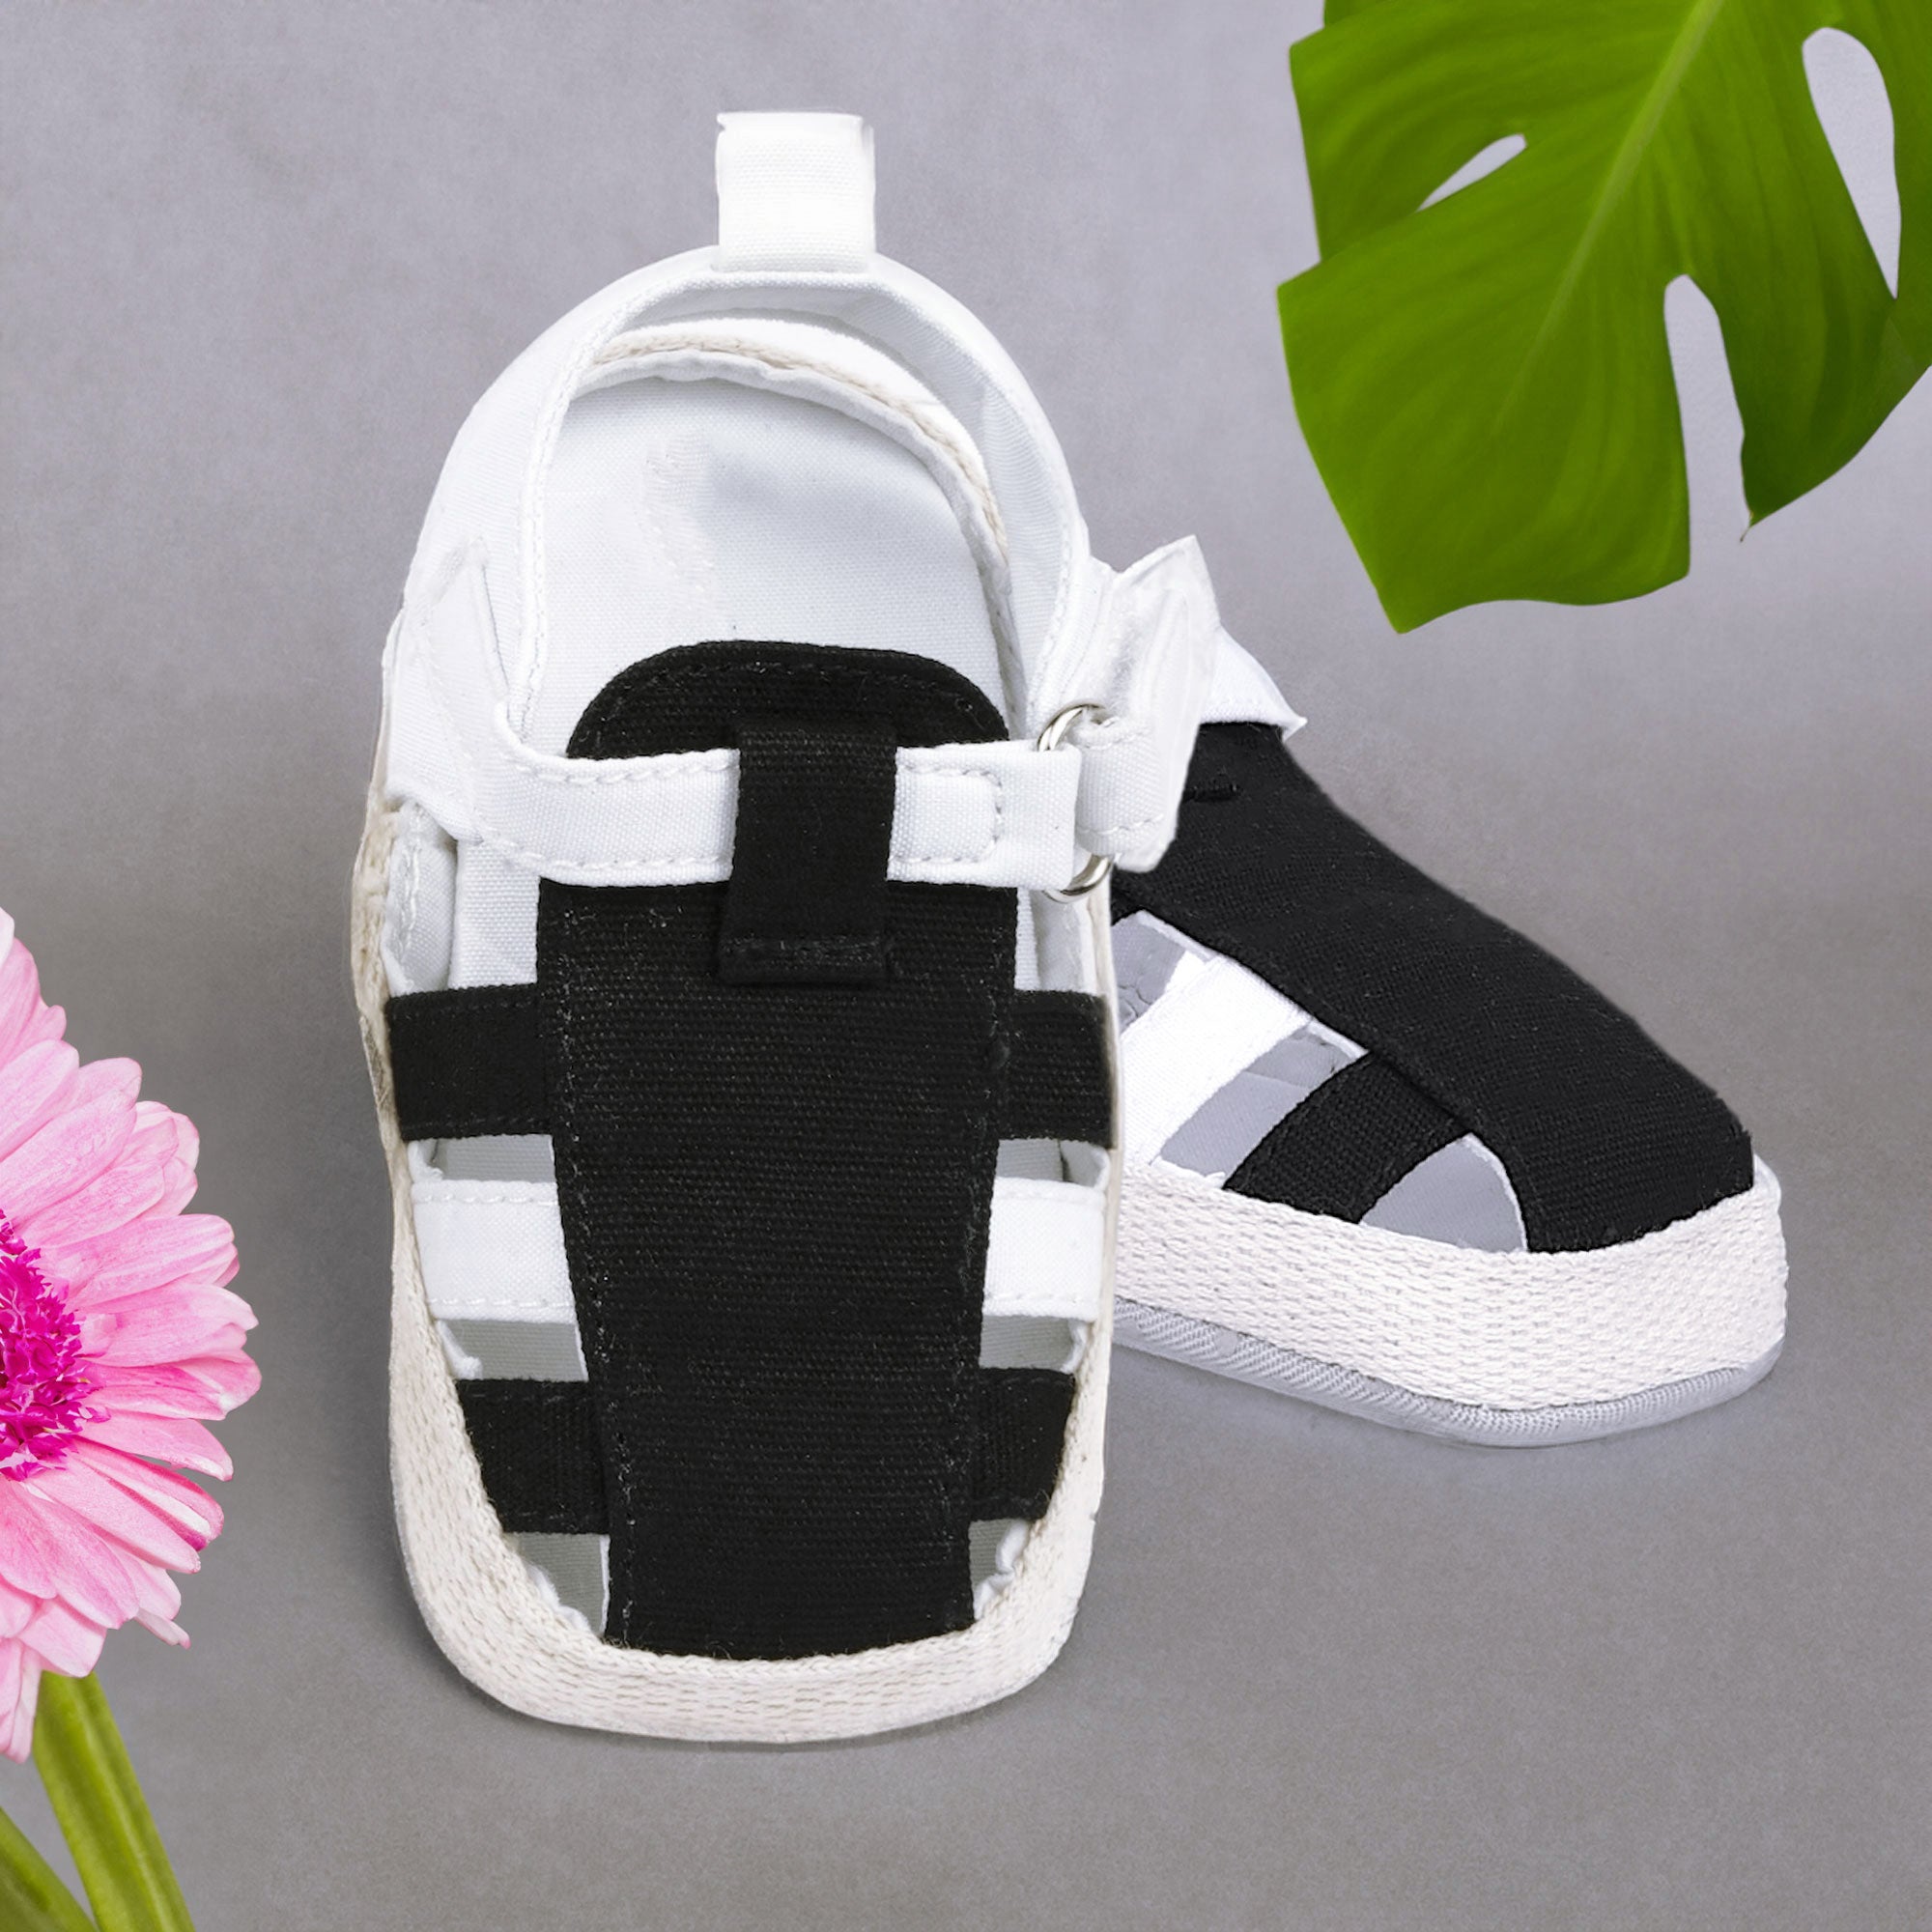 Baby Moo Stylish And Breathable Velcro Straps Anti-Skid Sandals - Black, White